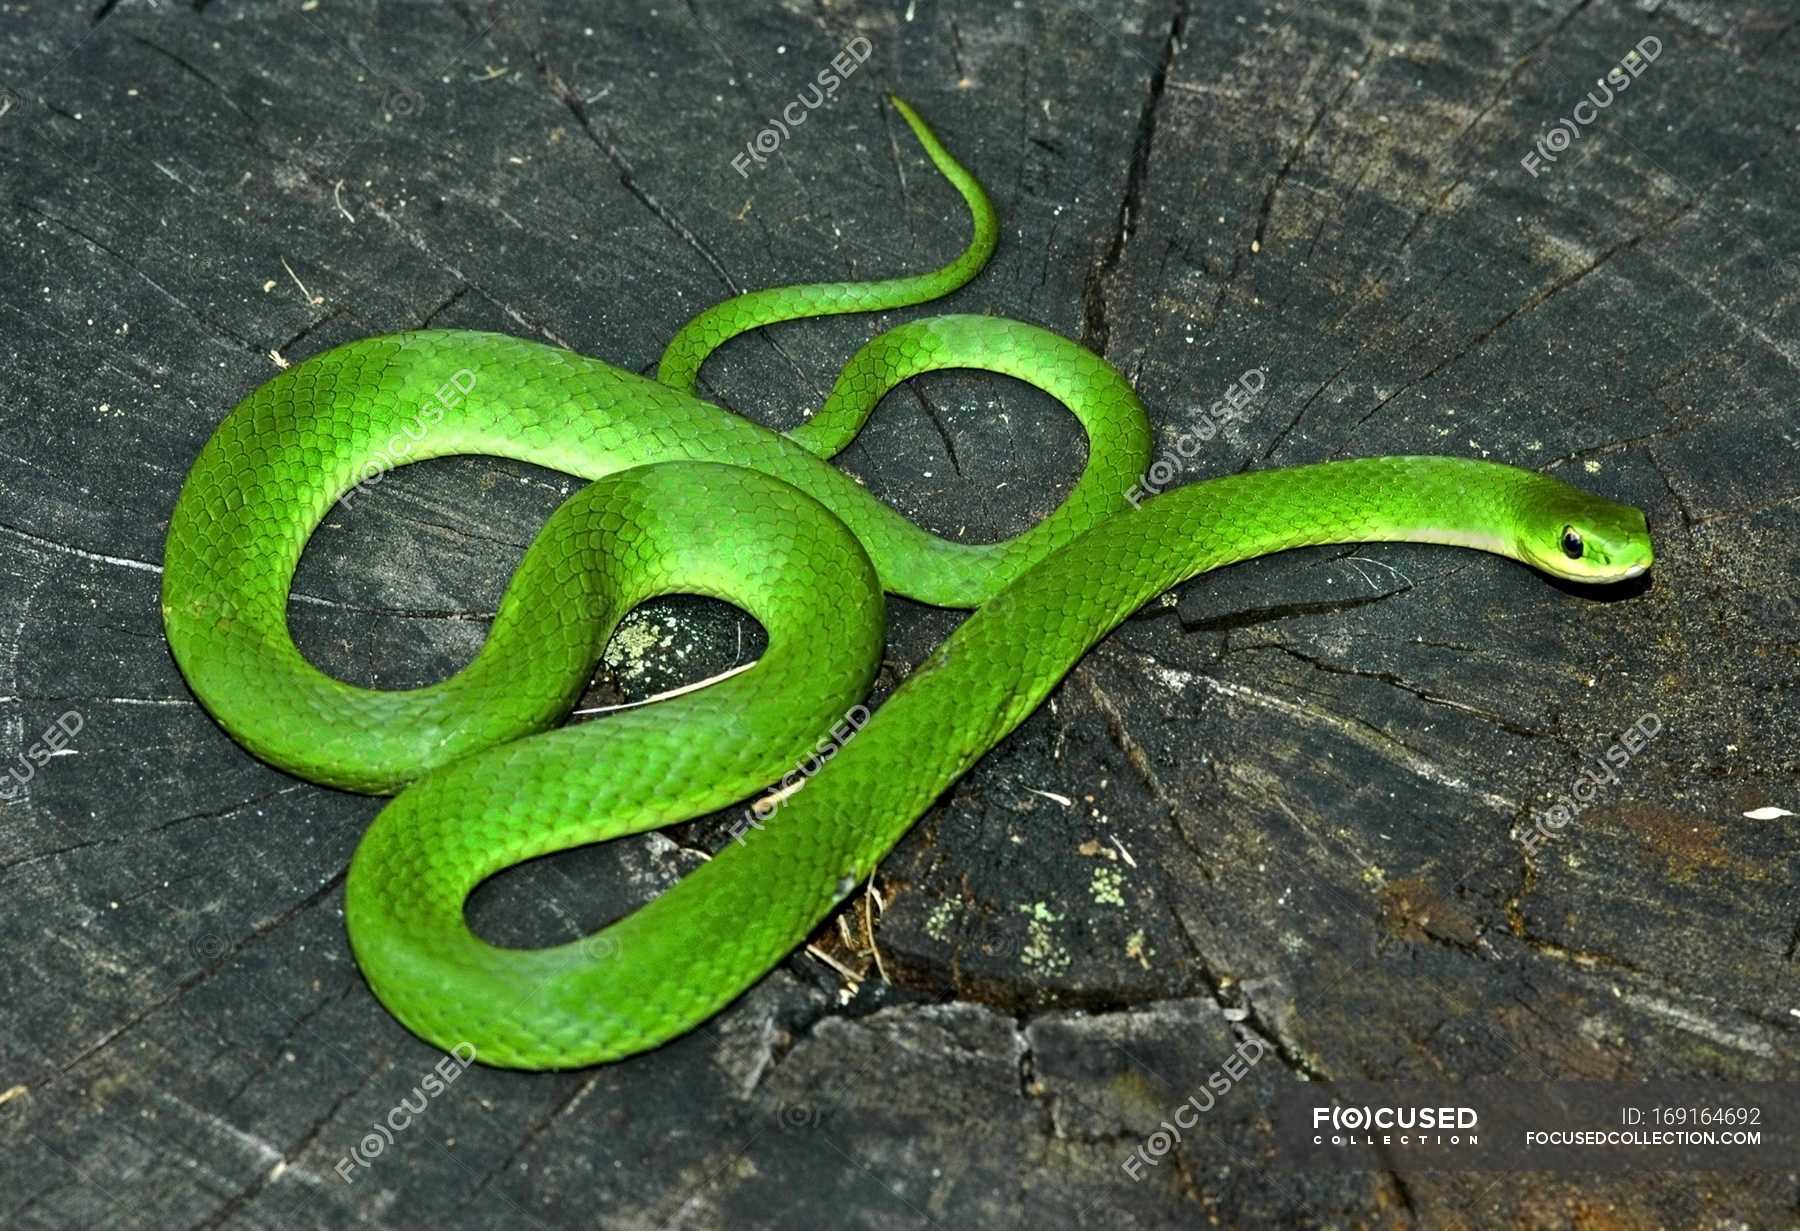 Bright Green Snake — Stock Photo | #169164692